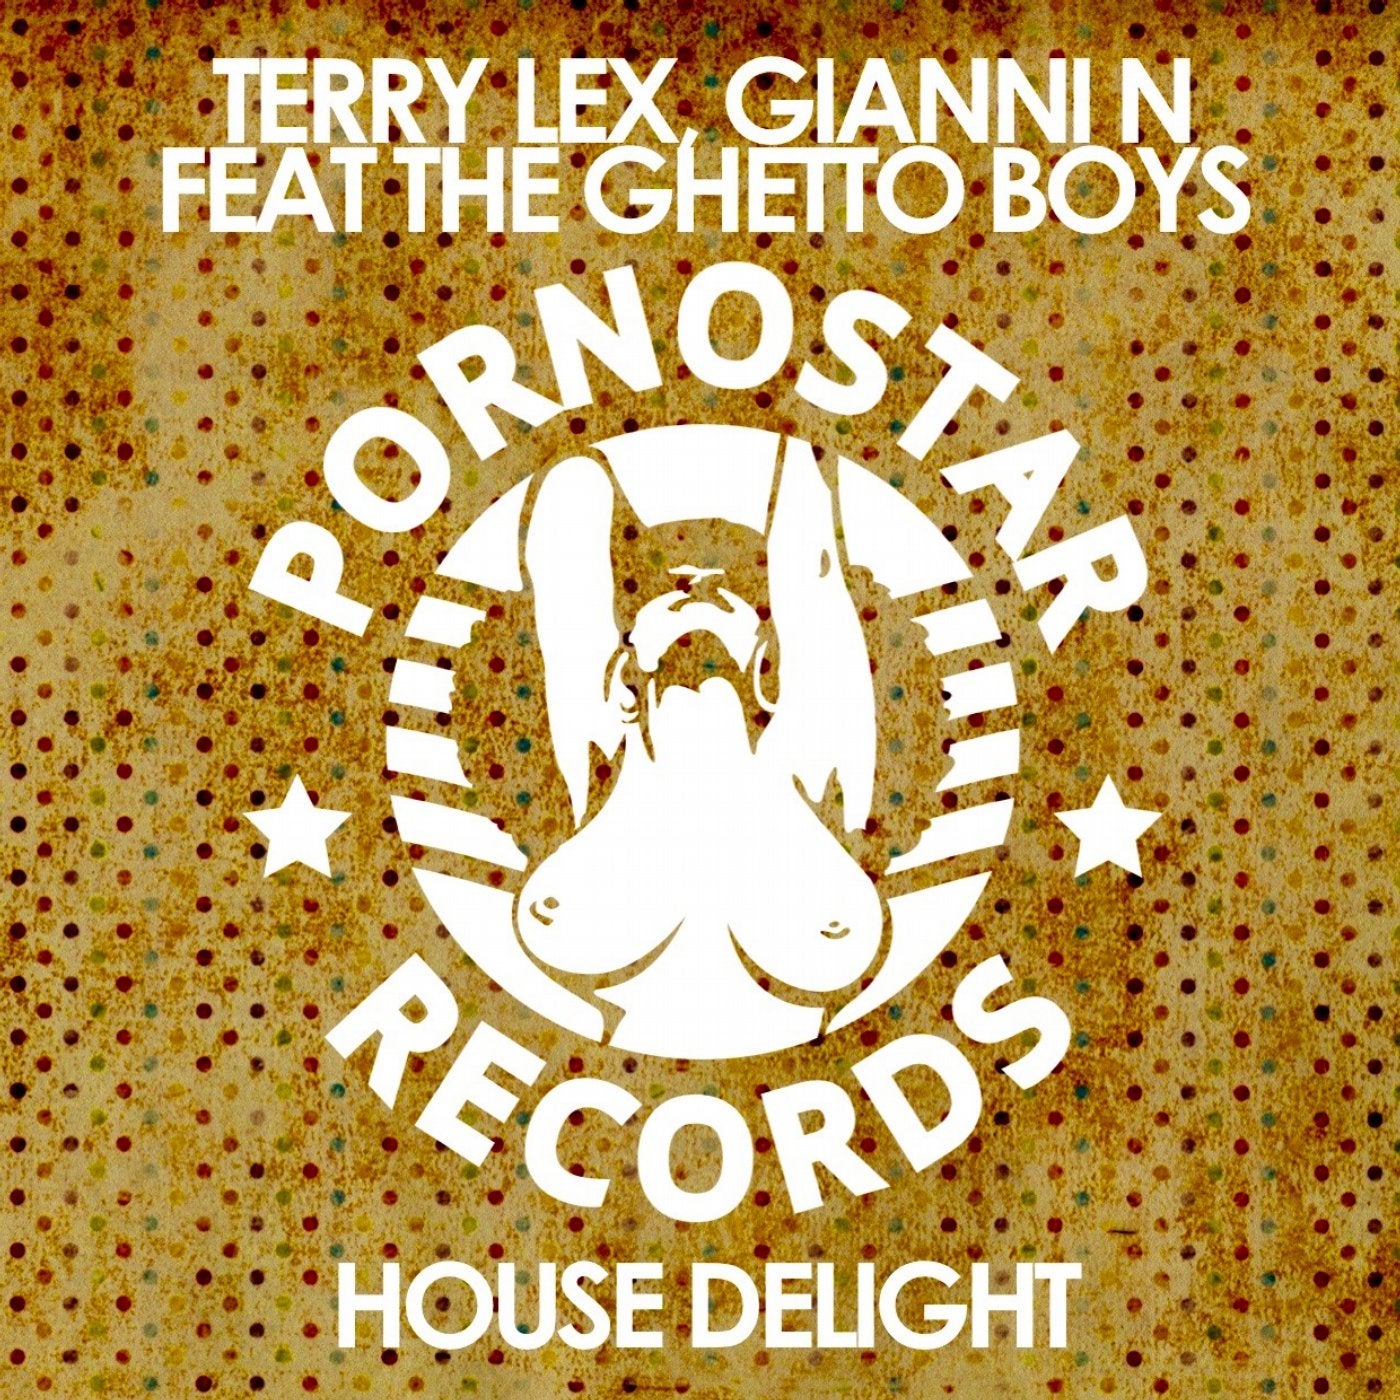 Terry Lex, Gianni N Feat The Ghetto Boys - House Delight